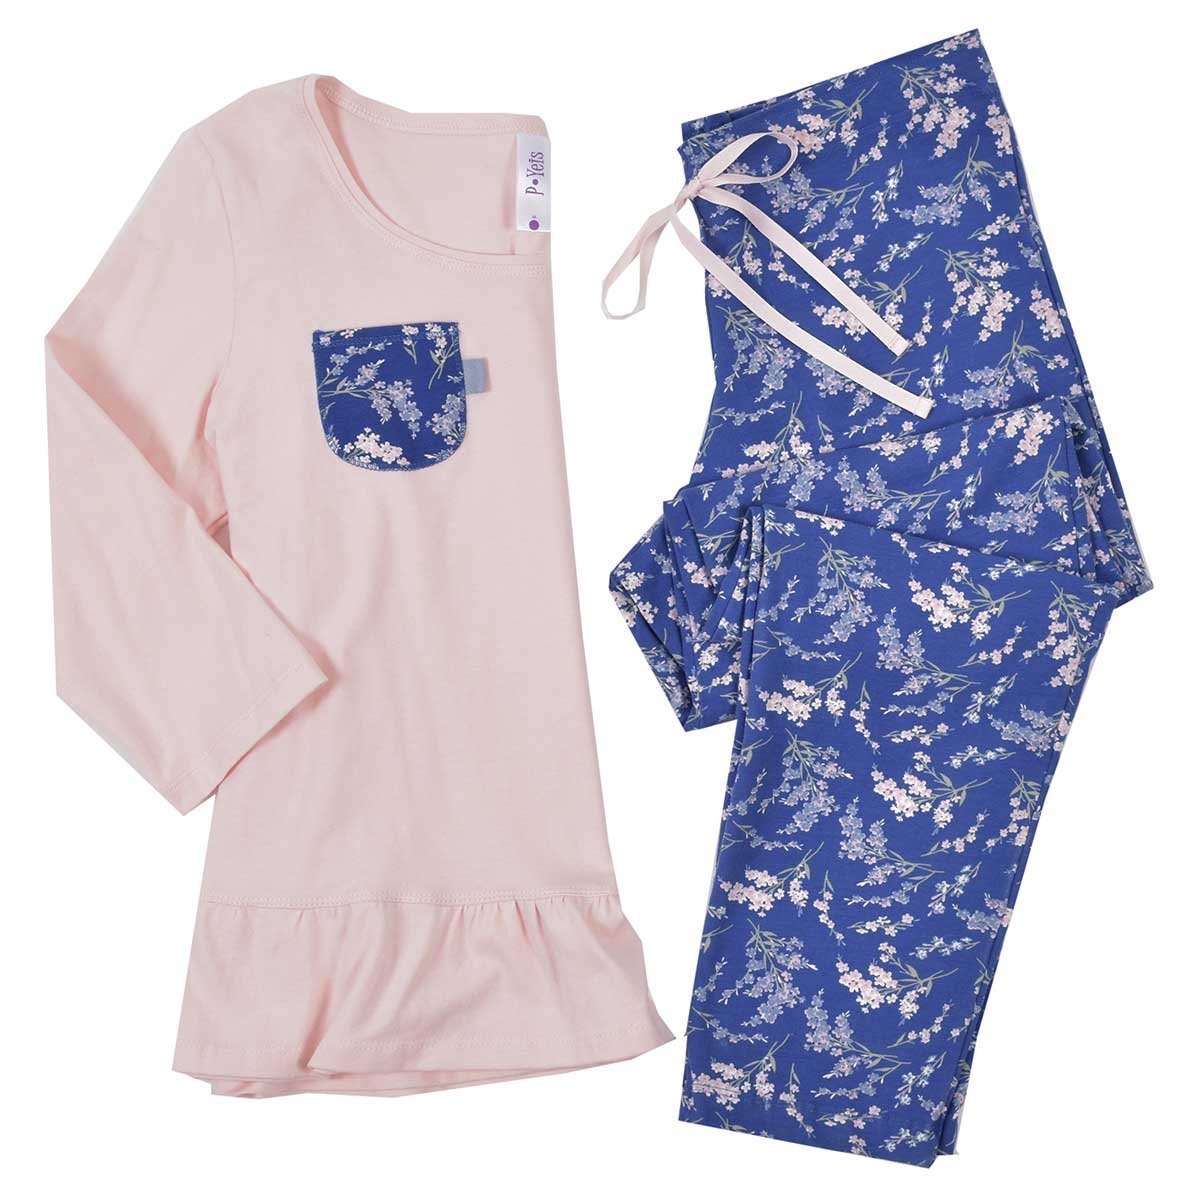 Pijama para Dama Blusa con Olan en Ruedo Y Pantalón P Yeis